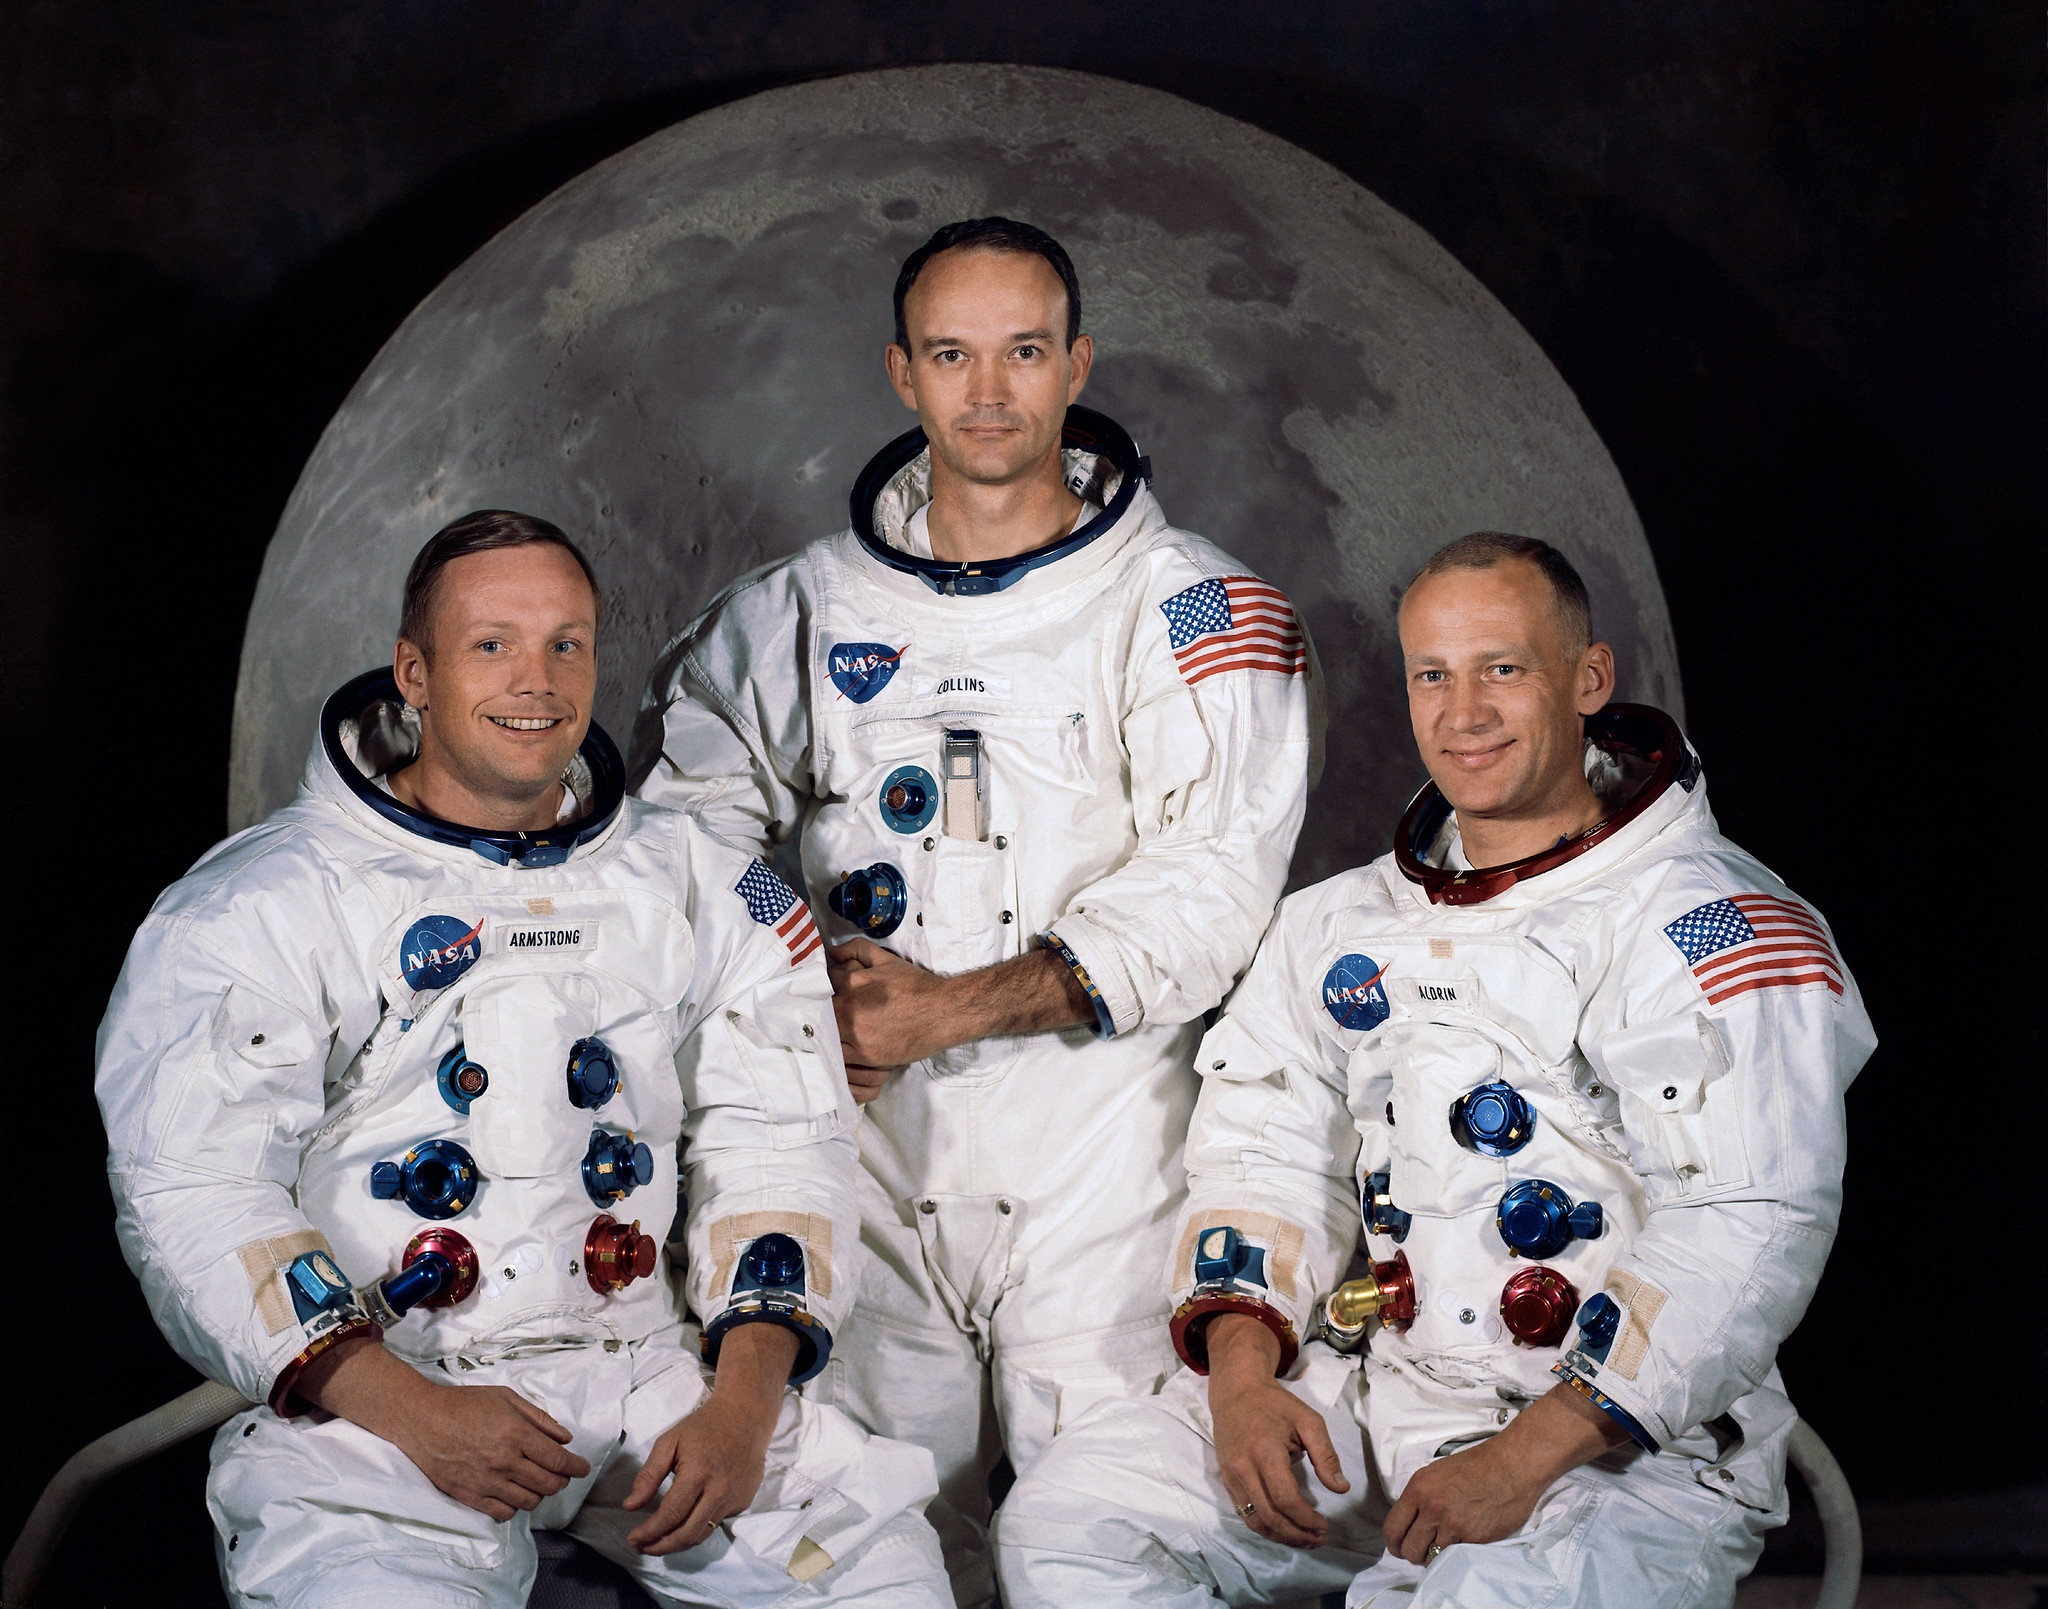 Službeni portret astronauta misije Apollo 11, na fotografiji slijeva prema desno: Armstrong, Collins, Aldrin.